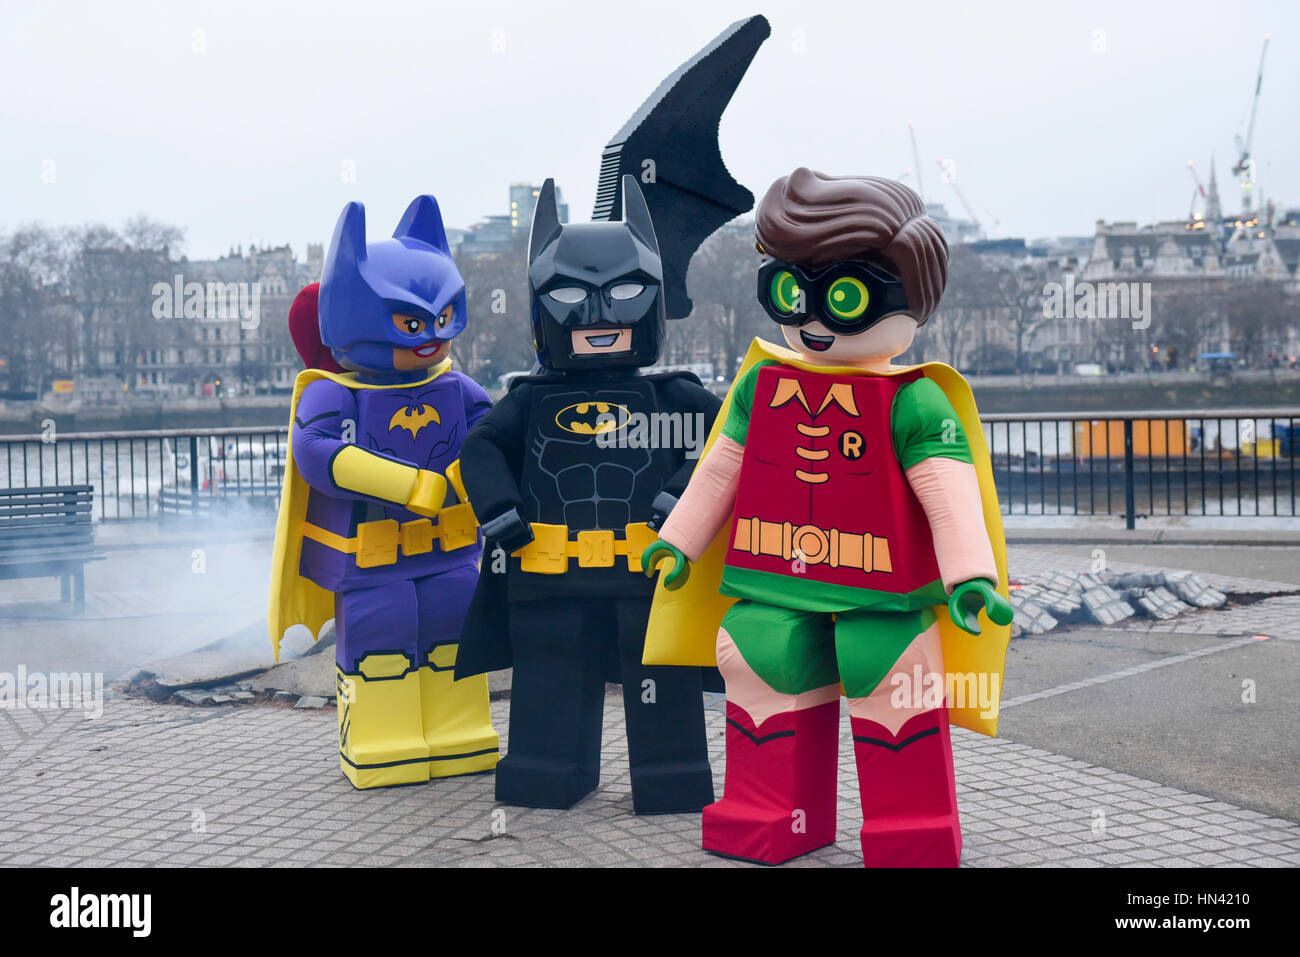 Lego robin lego batgirl hi-res stock photography and images - Alamy